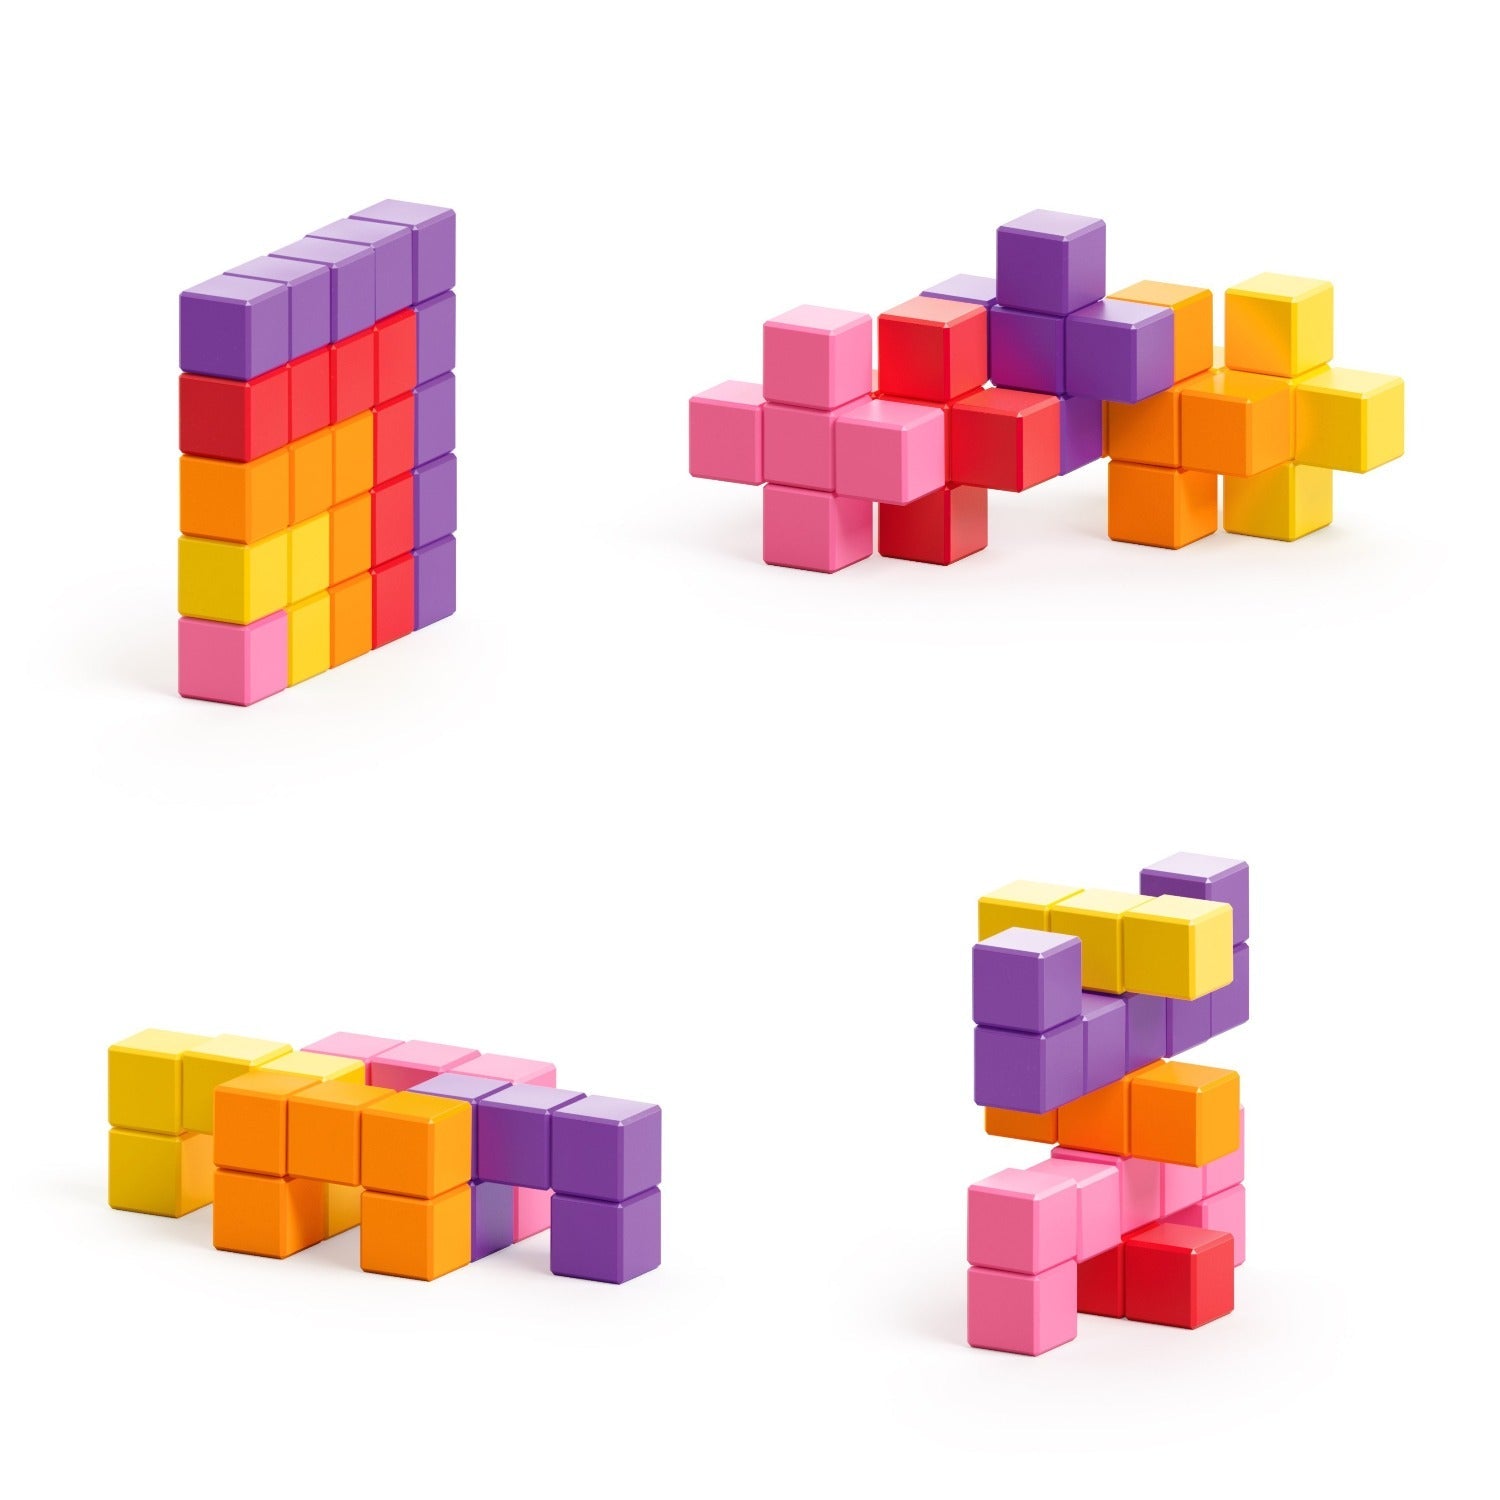 PIXIO-PIXOPLASMA-Abstract-Series-Magnetic-Blocks-1020201-1_2000x_9a359d89-a50e-4b6c-99cb-0d32ec30ce79.jpg